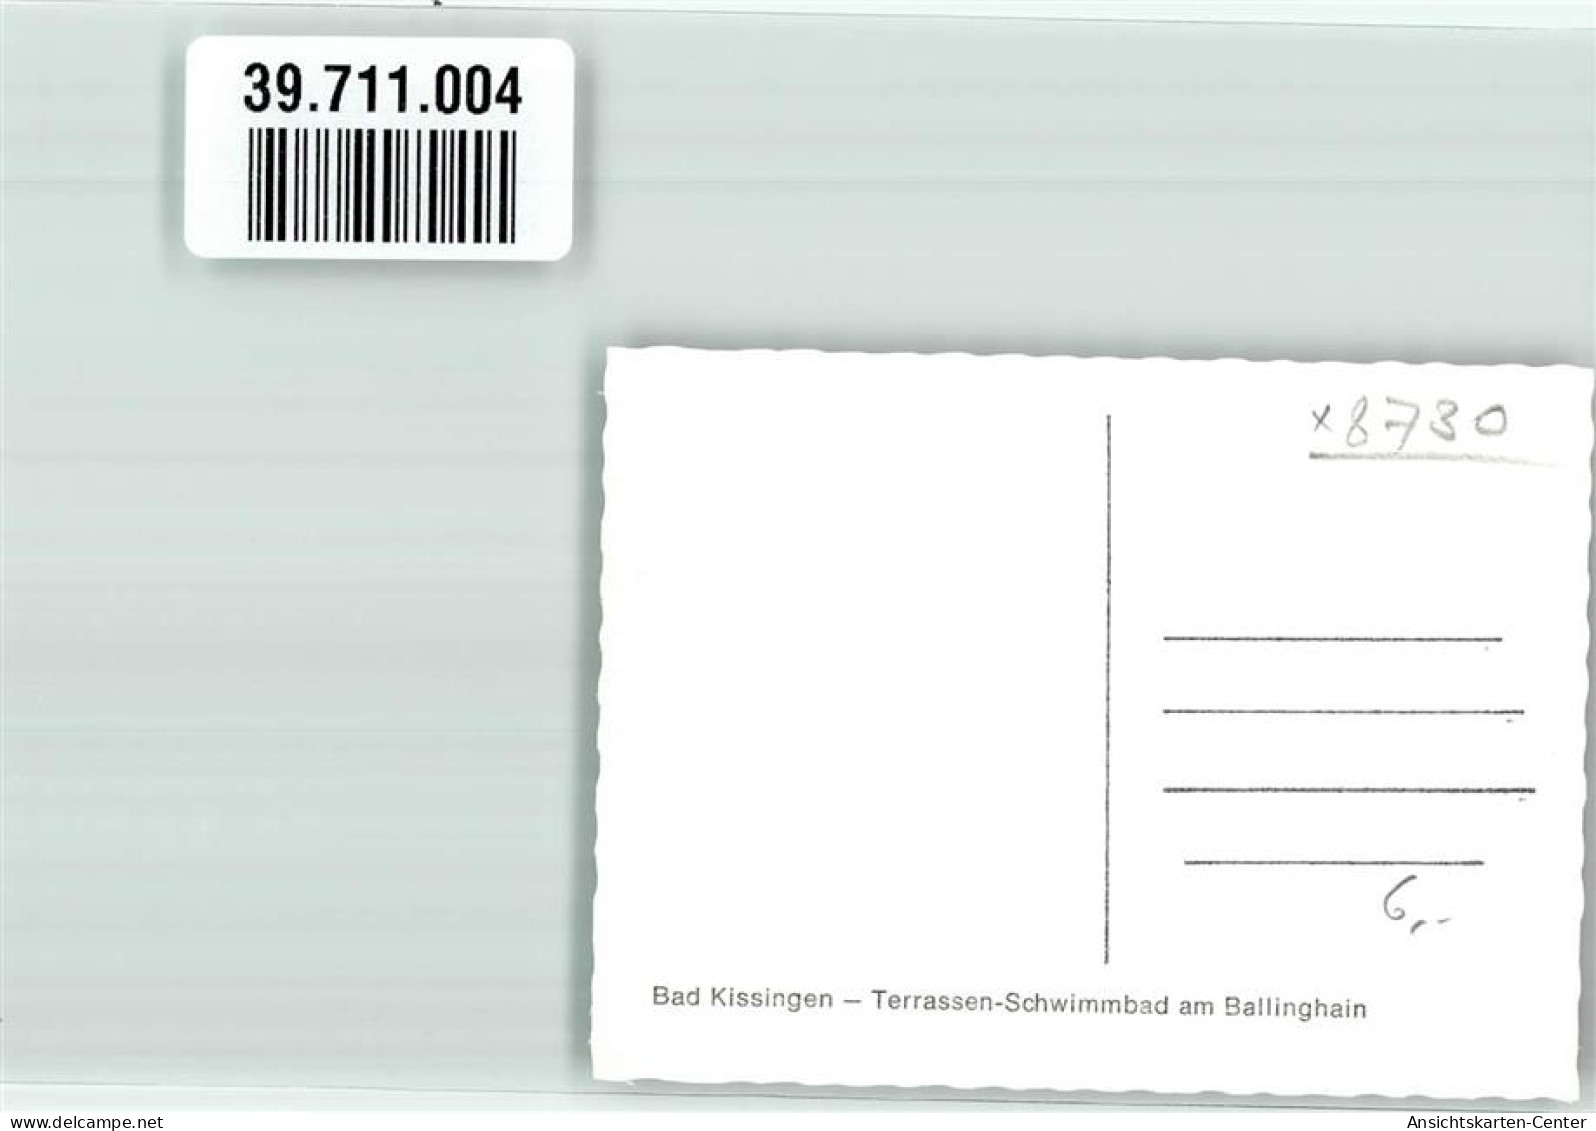 39711004 - Bad Kissingen - Bad Kissingen